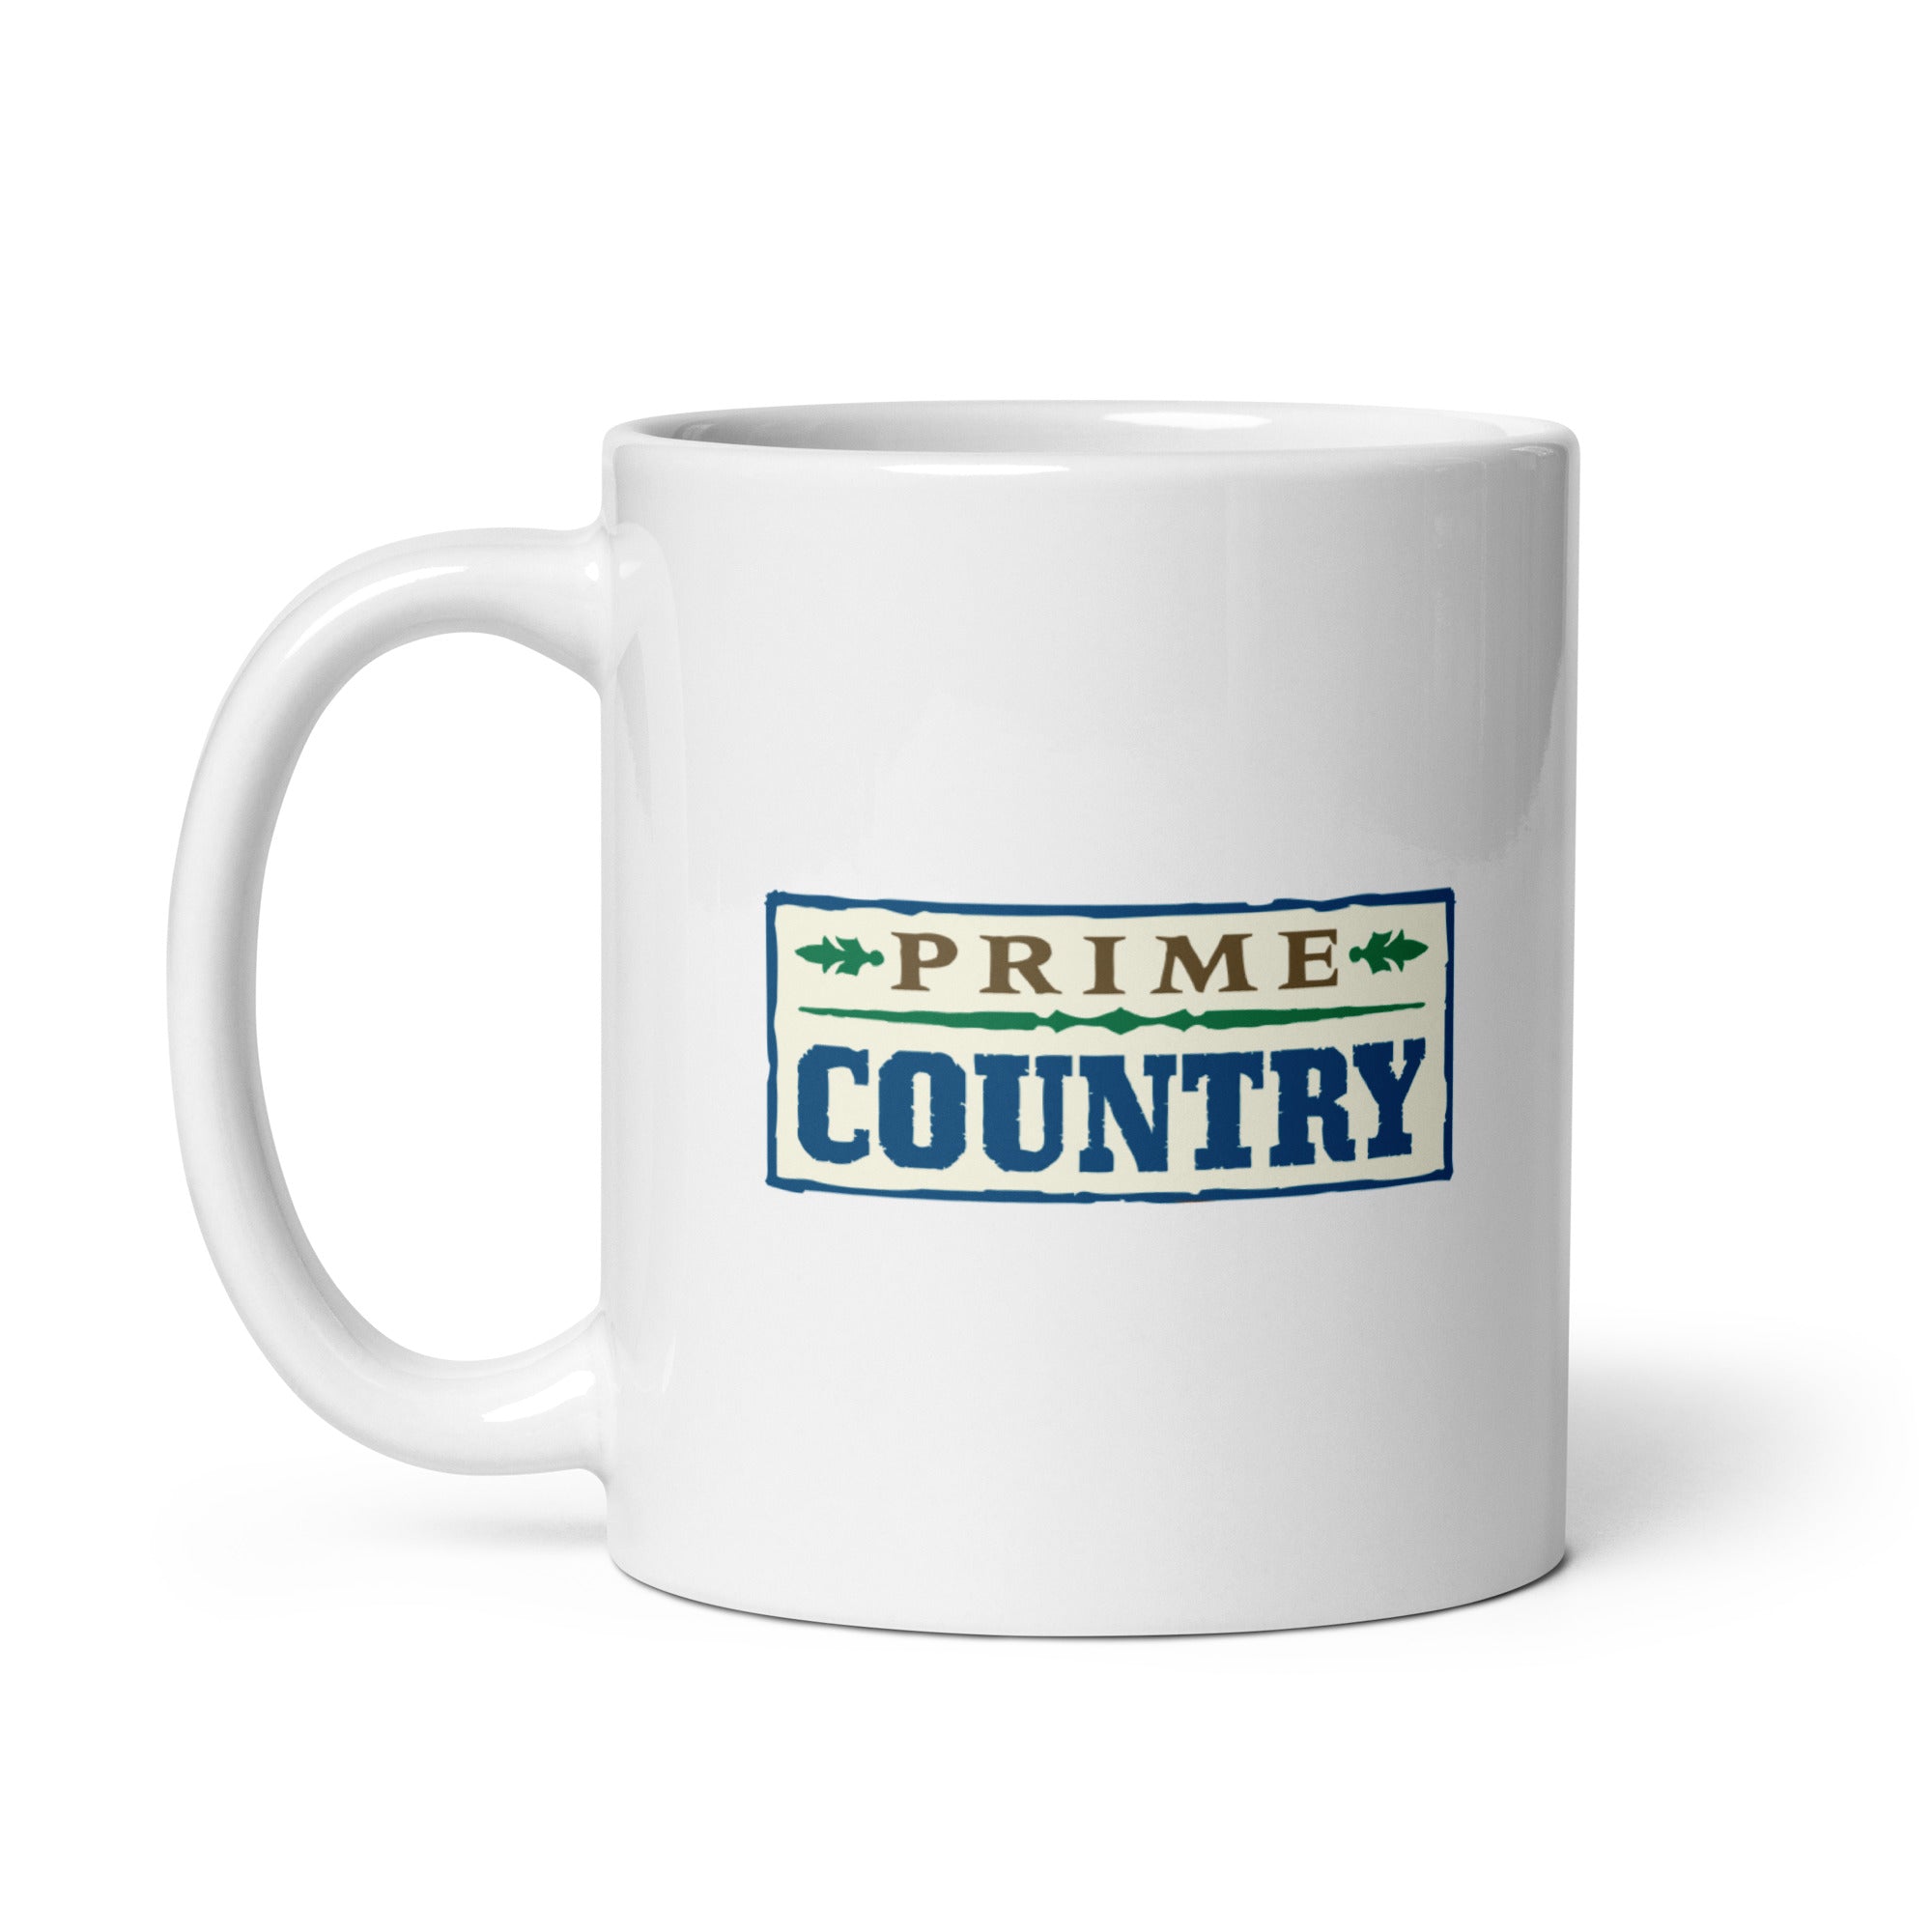 Prime Country: Mug